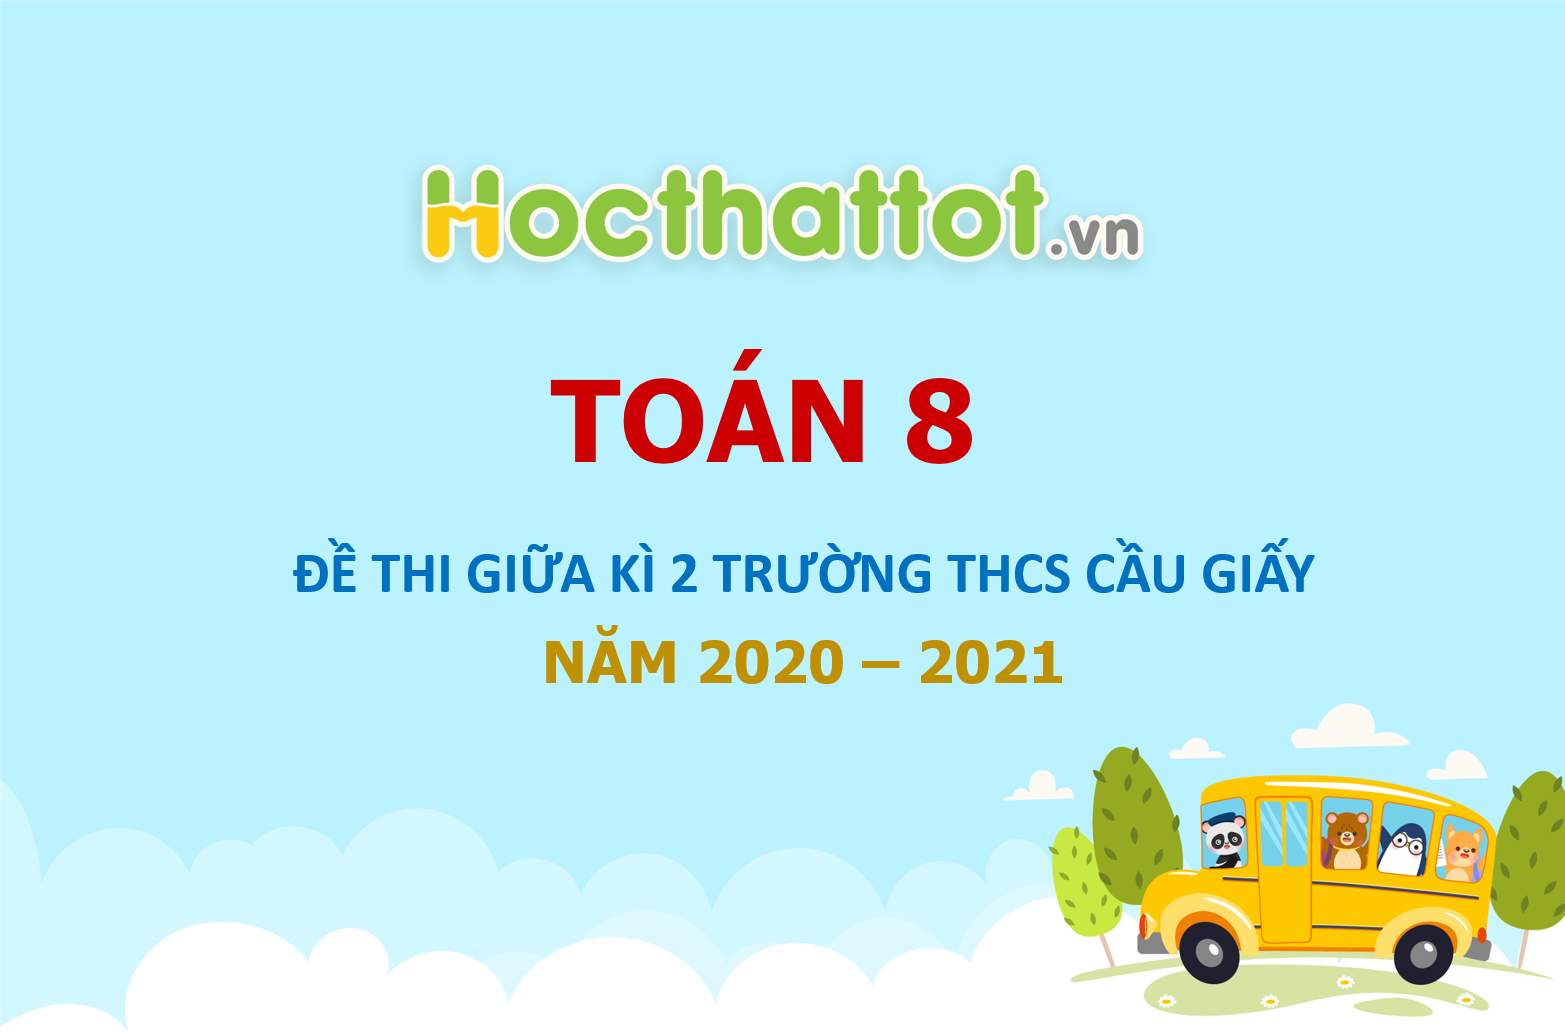 de-thi-giua-hoc-ky-2-toan-8-nam-2020-2021-truong-thcs-cau-giay-ha-noi